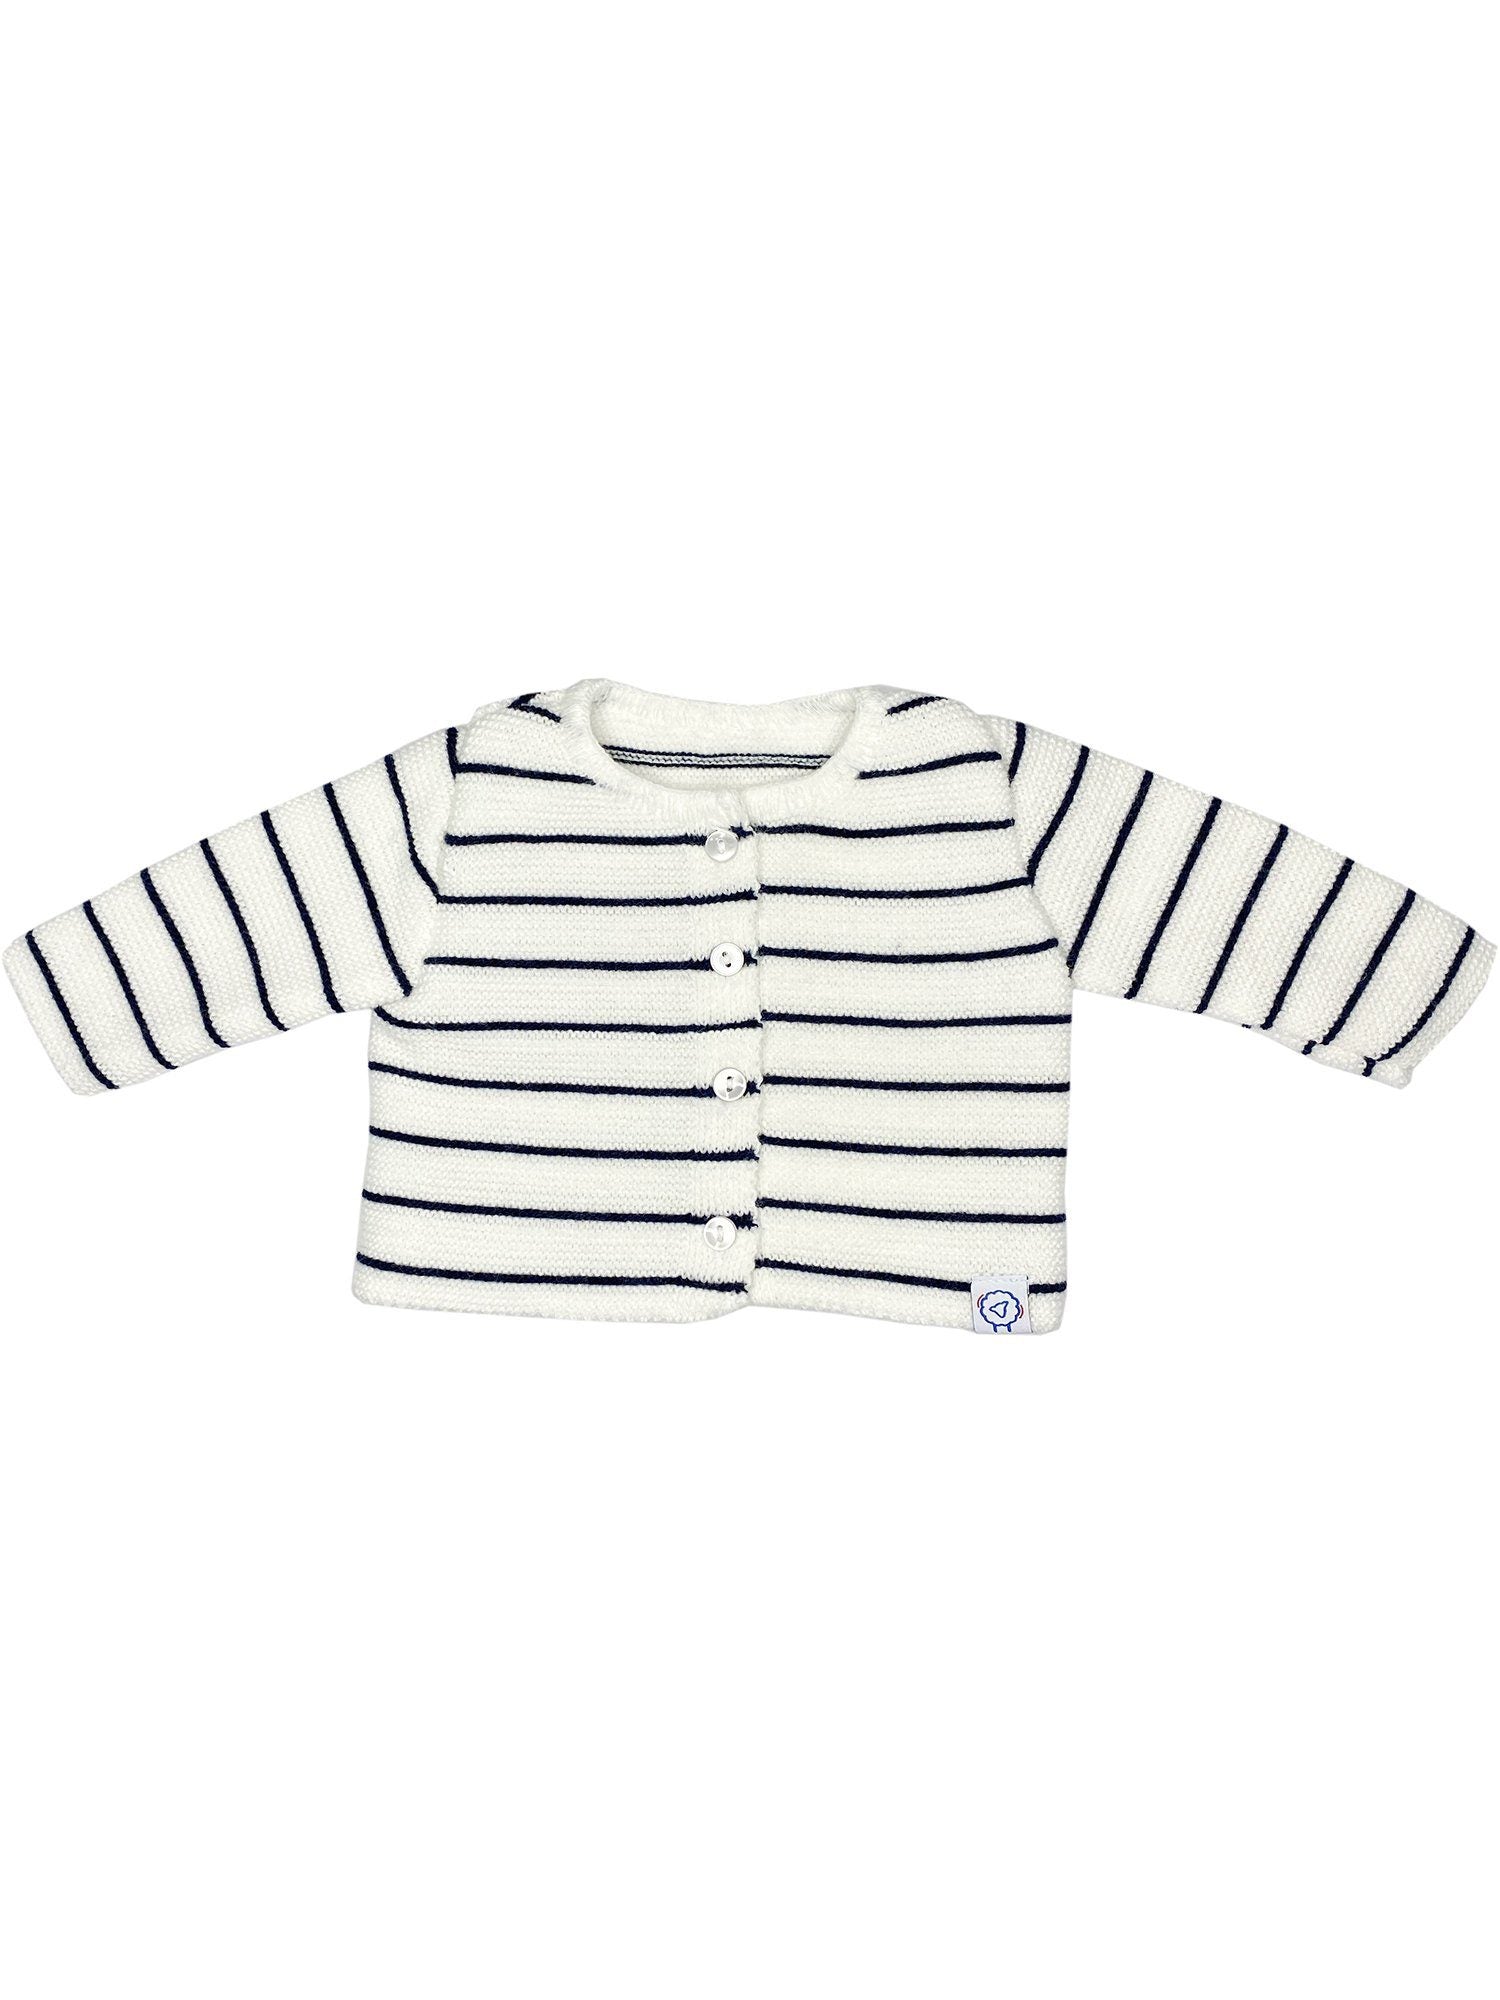 Knitted Premature Baby Cardigan, Breton Stripe White - Cardigan / Jacket - La Manufacture de Layette